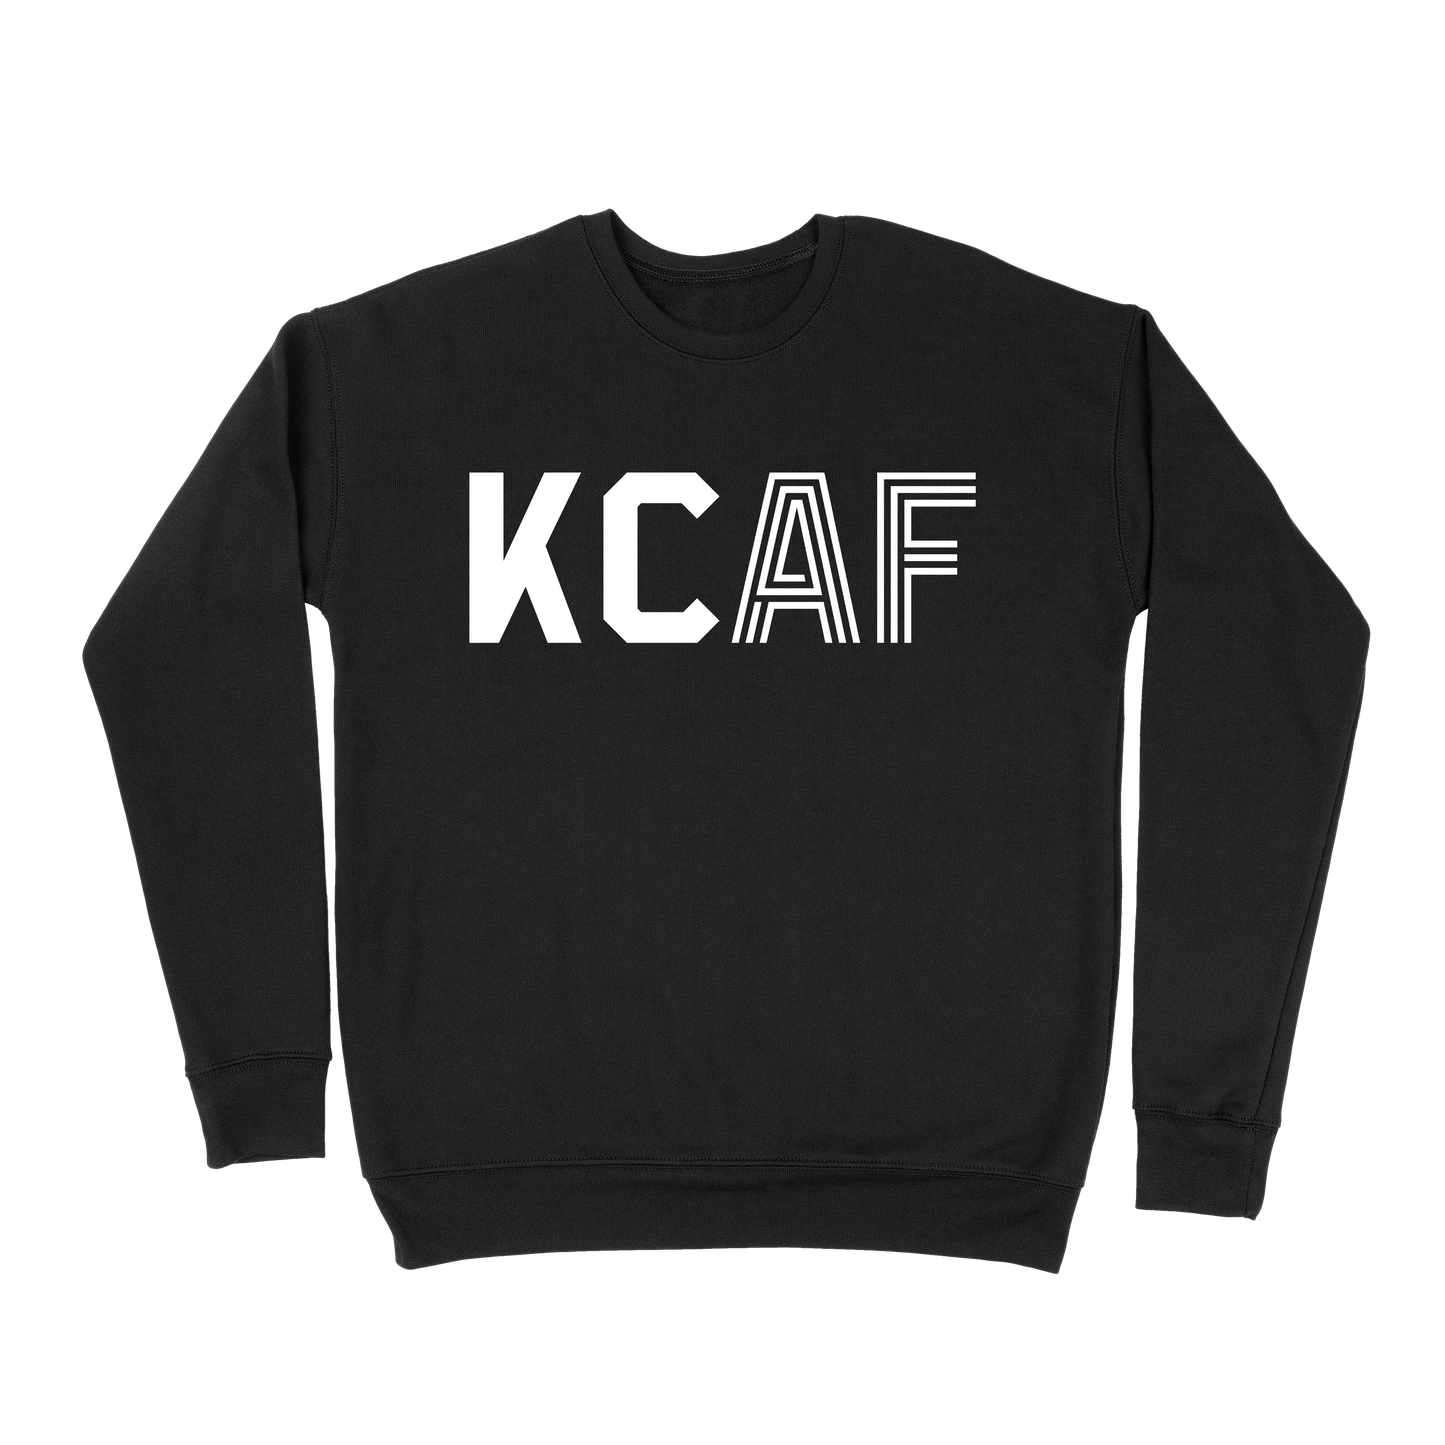 KCAF Sweatshirt - Black